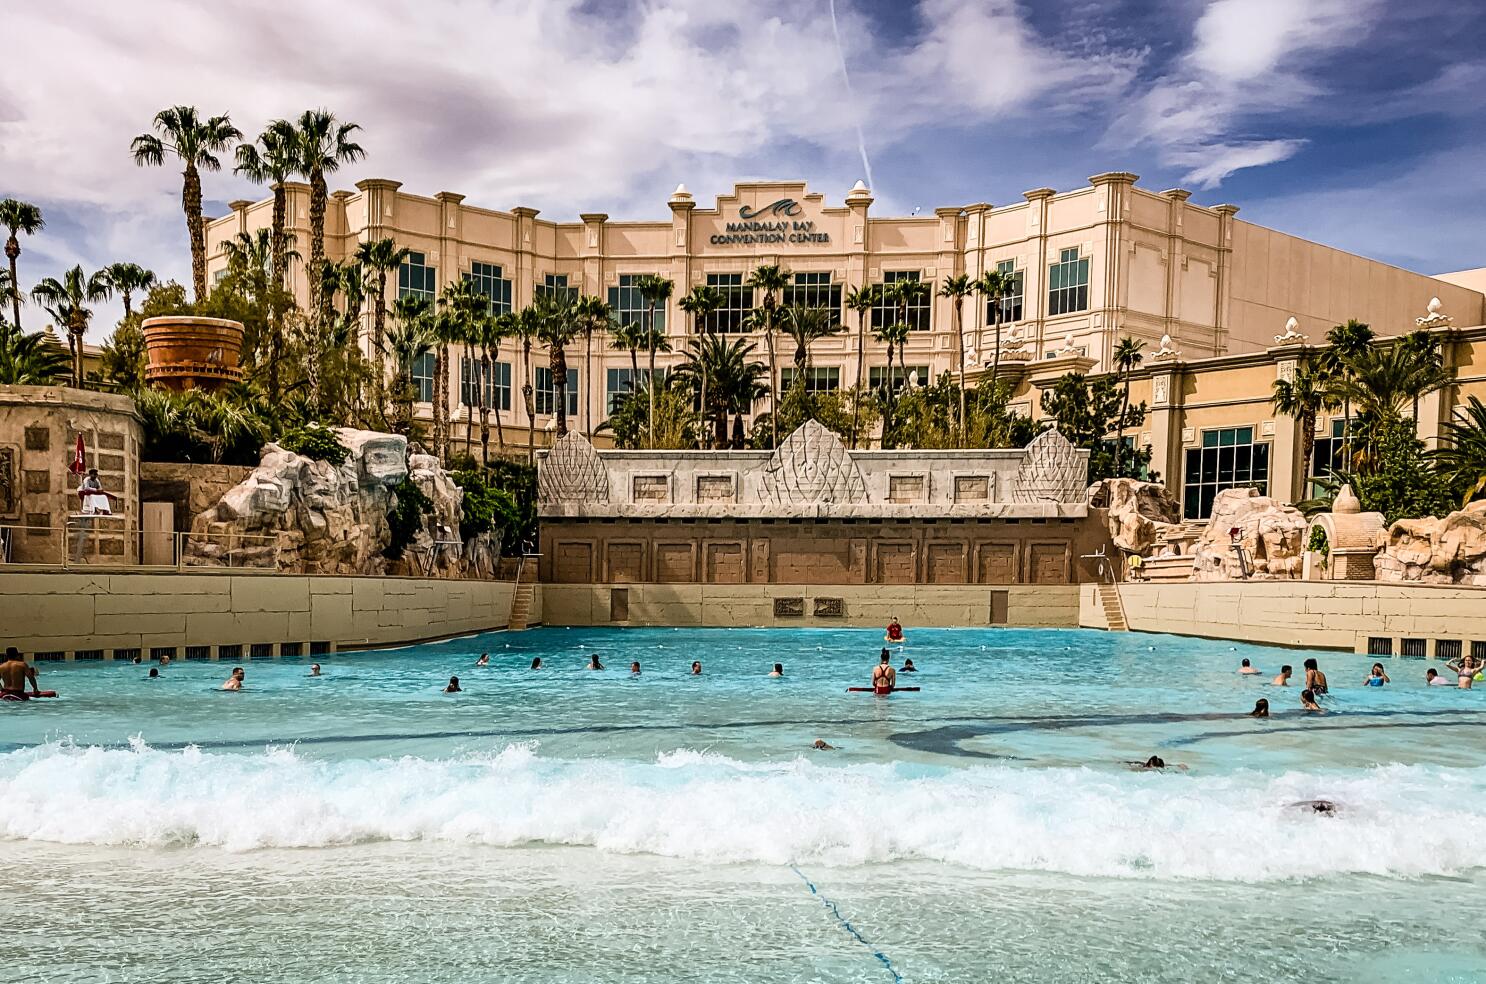 Westgate Las Vegas Hotel Pool & Cabana